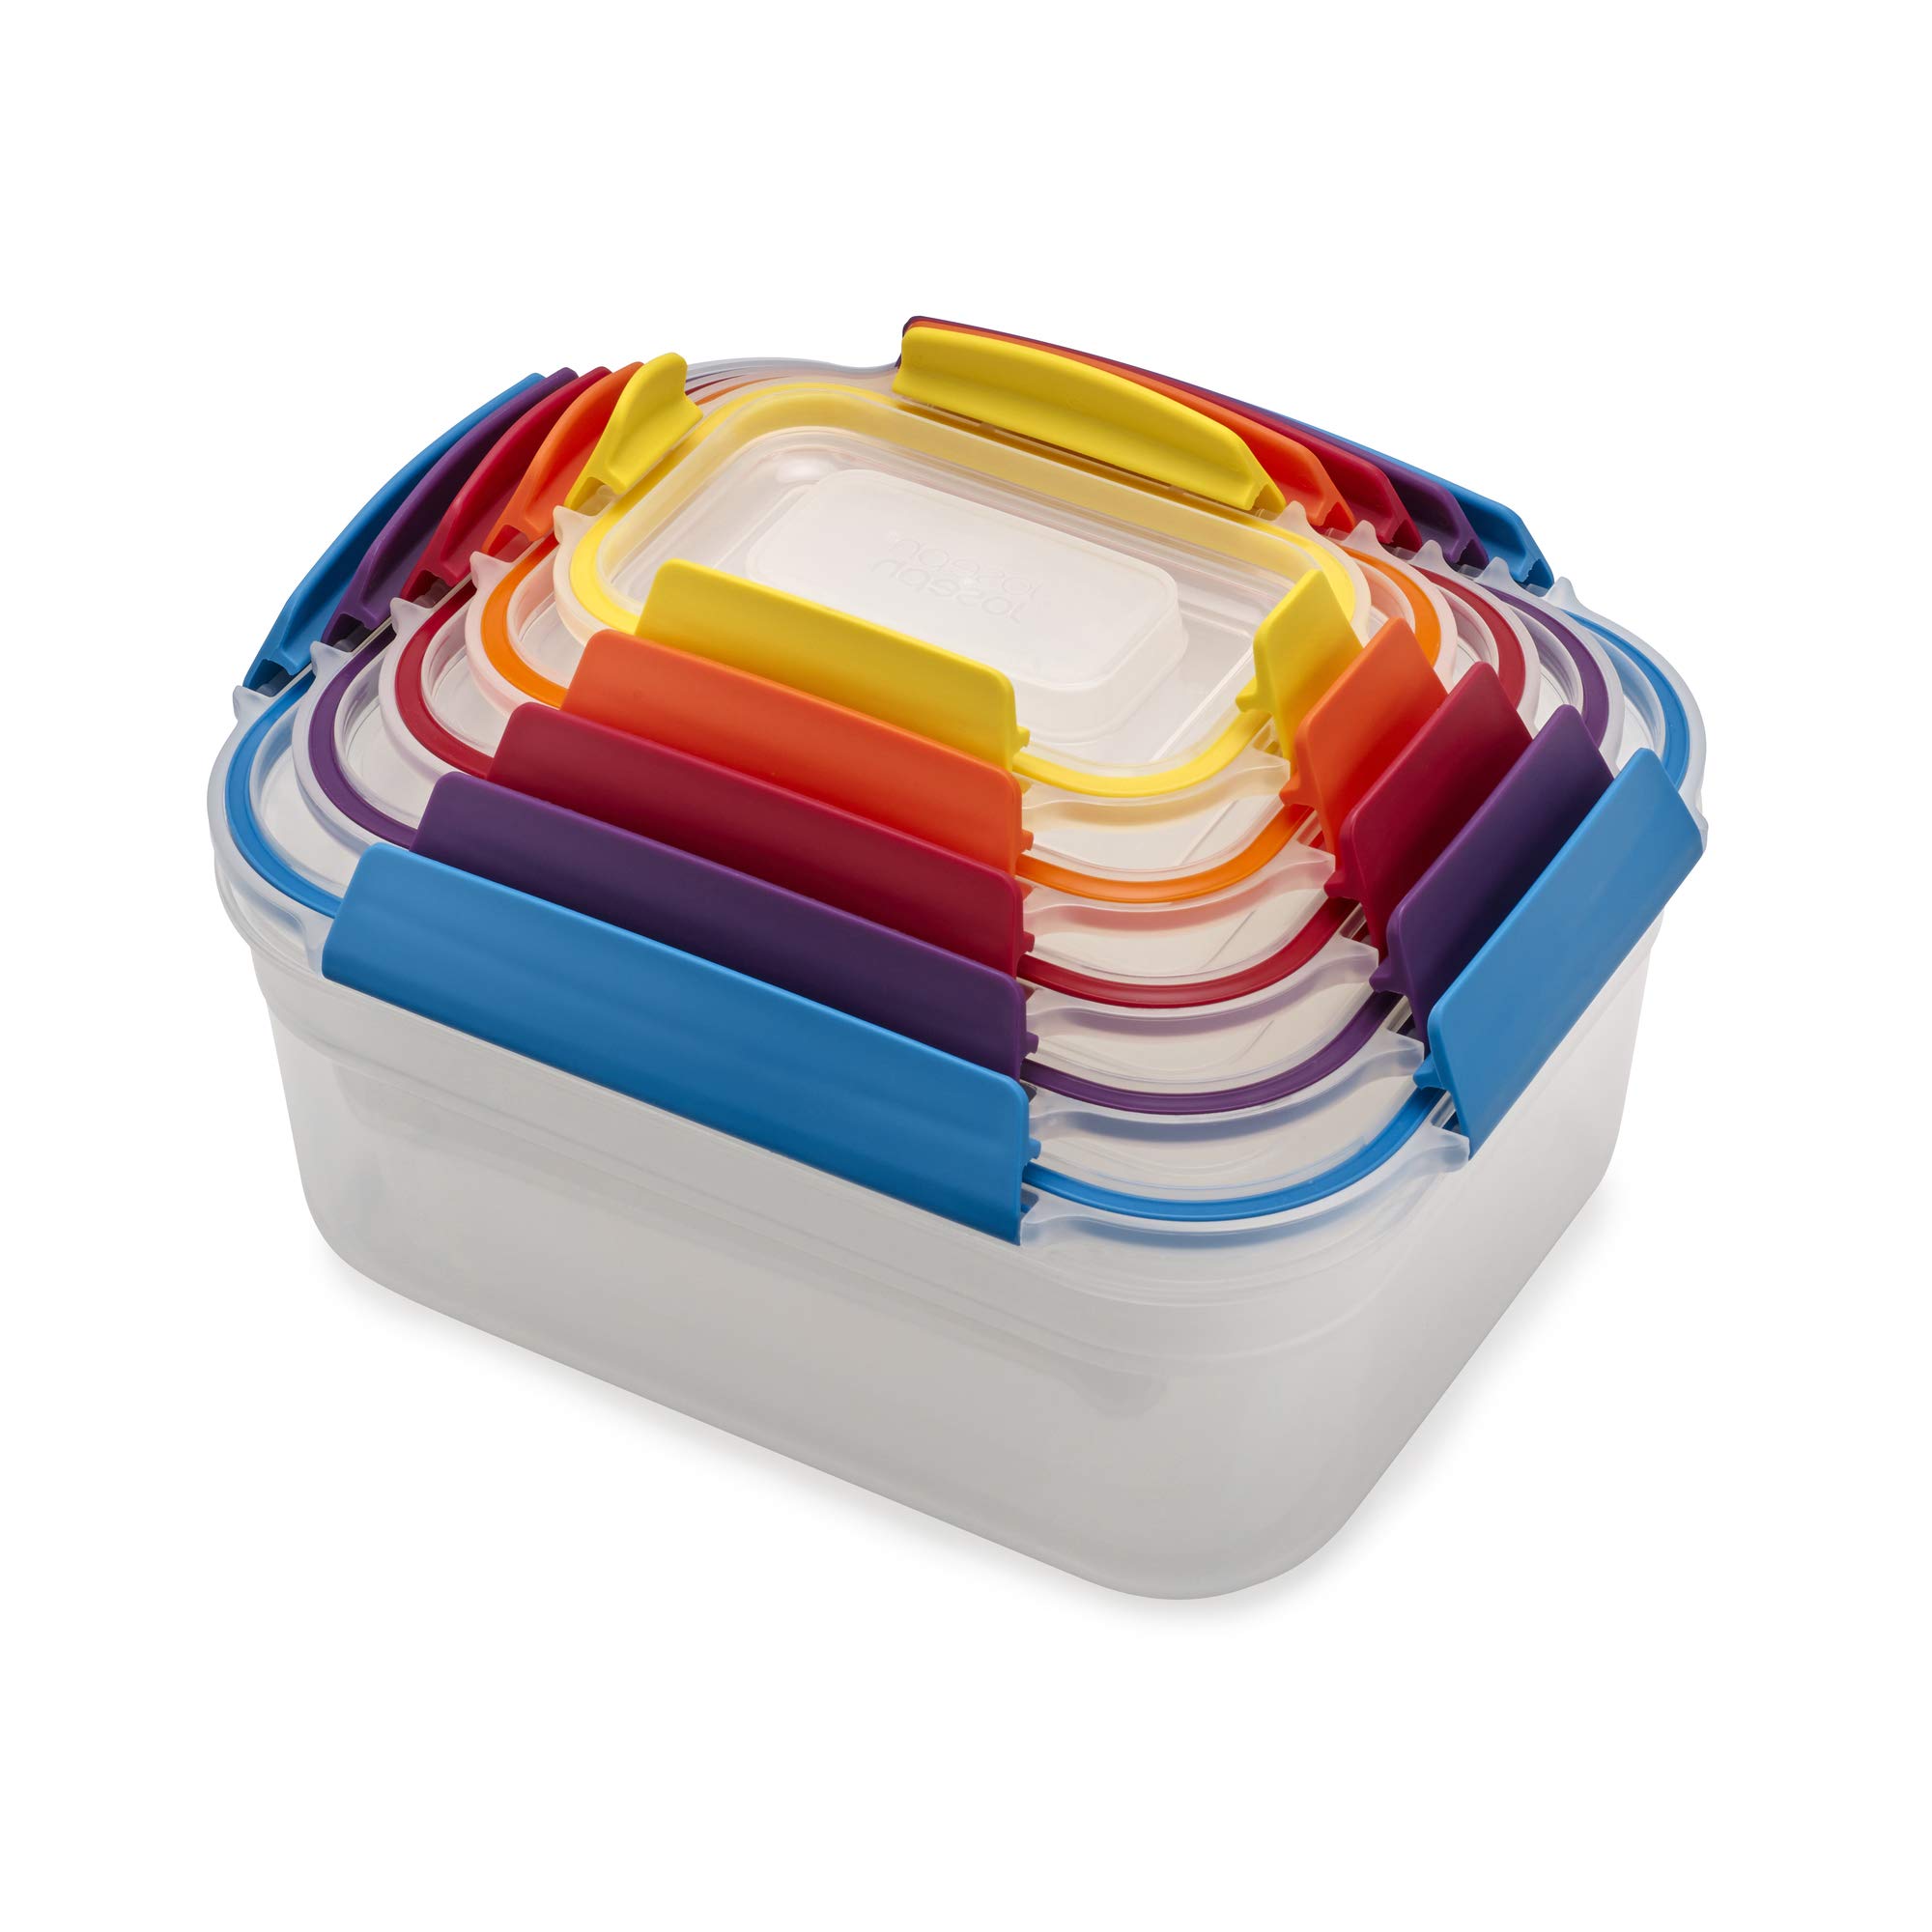 Joseph Joseph Nest Lock Plastic BPA Free Food Storage Container Set with Lockable Airtight Leakproof Lids, 10-Piece, Multi-Color $20.98